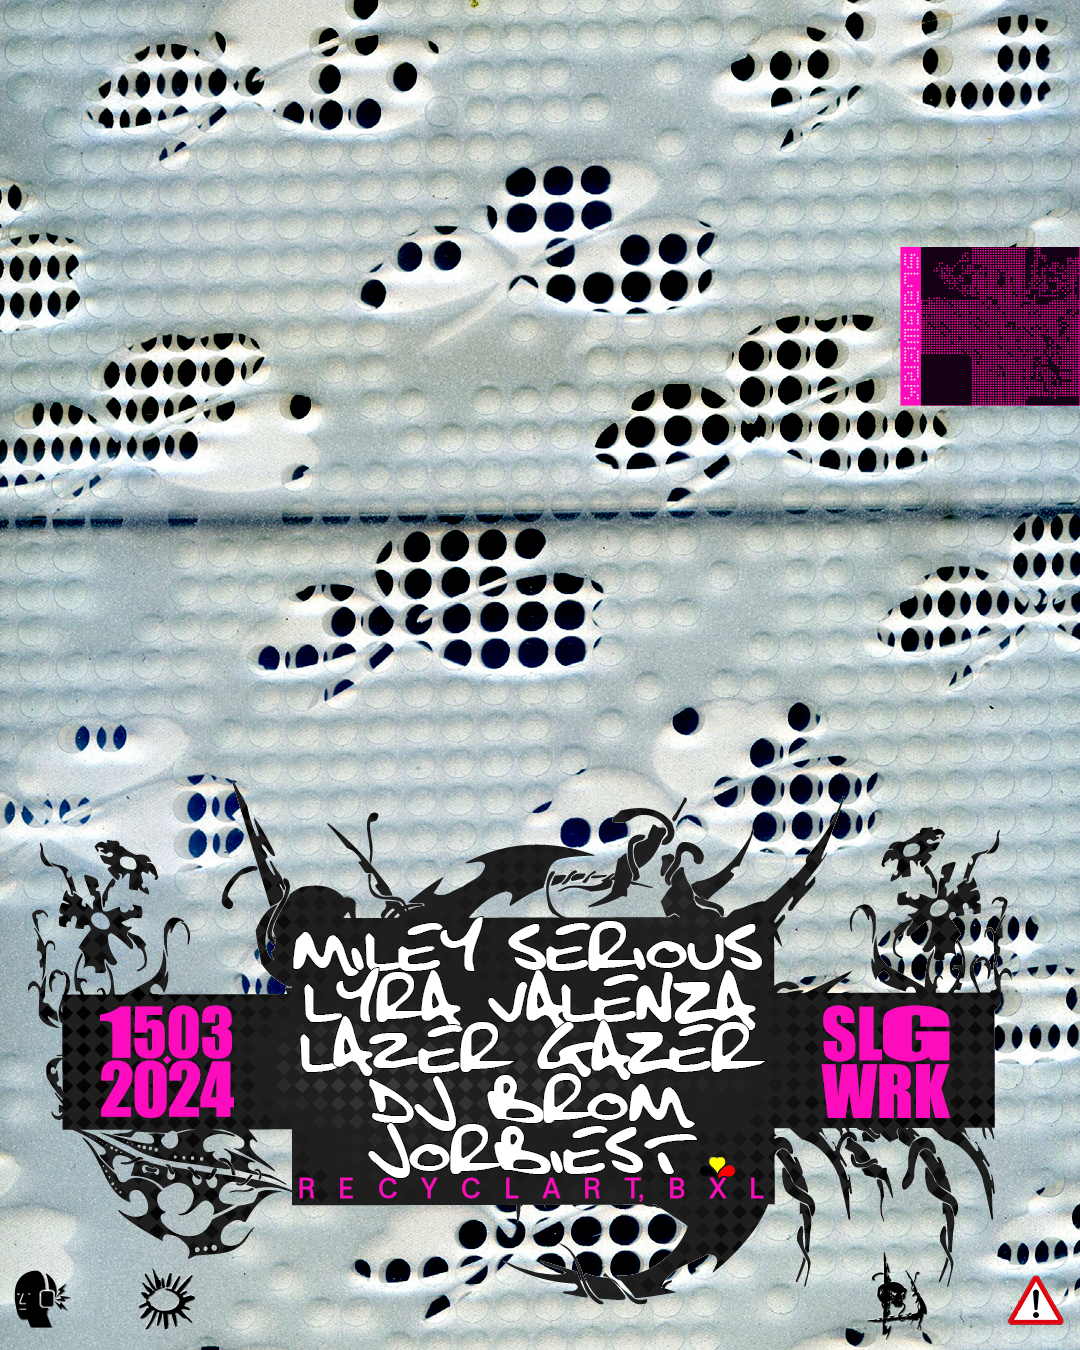 Slagwerk: Miley Serious / Lyra Valenza / LazerGazer / DJ Brom / Jorbiest - フライヤー表